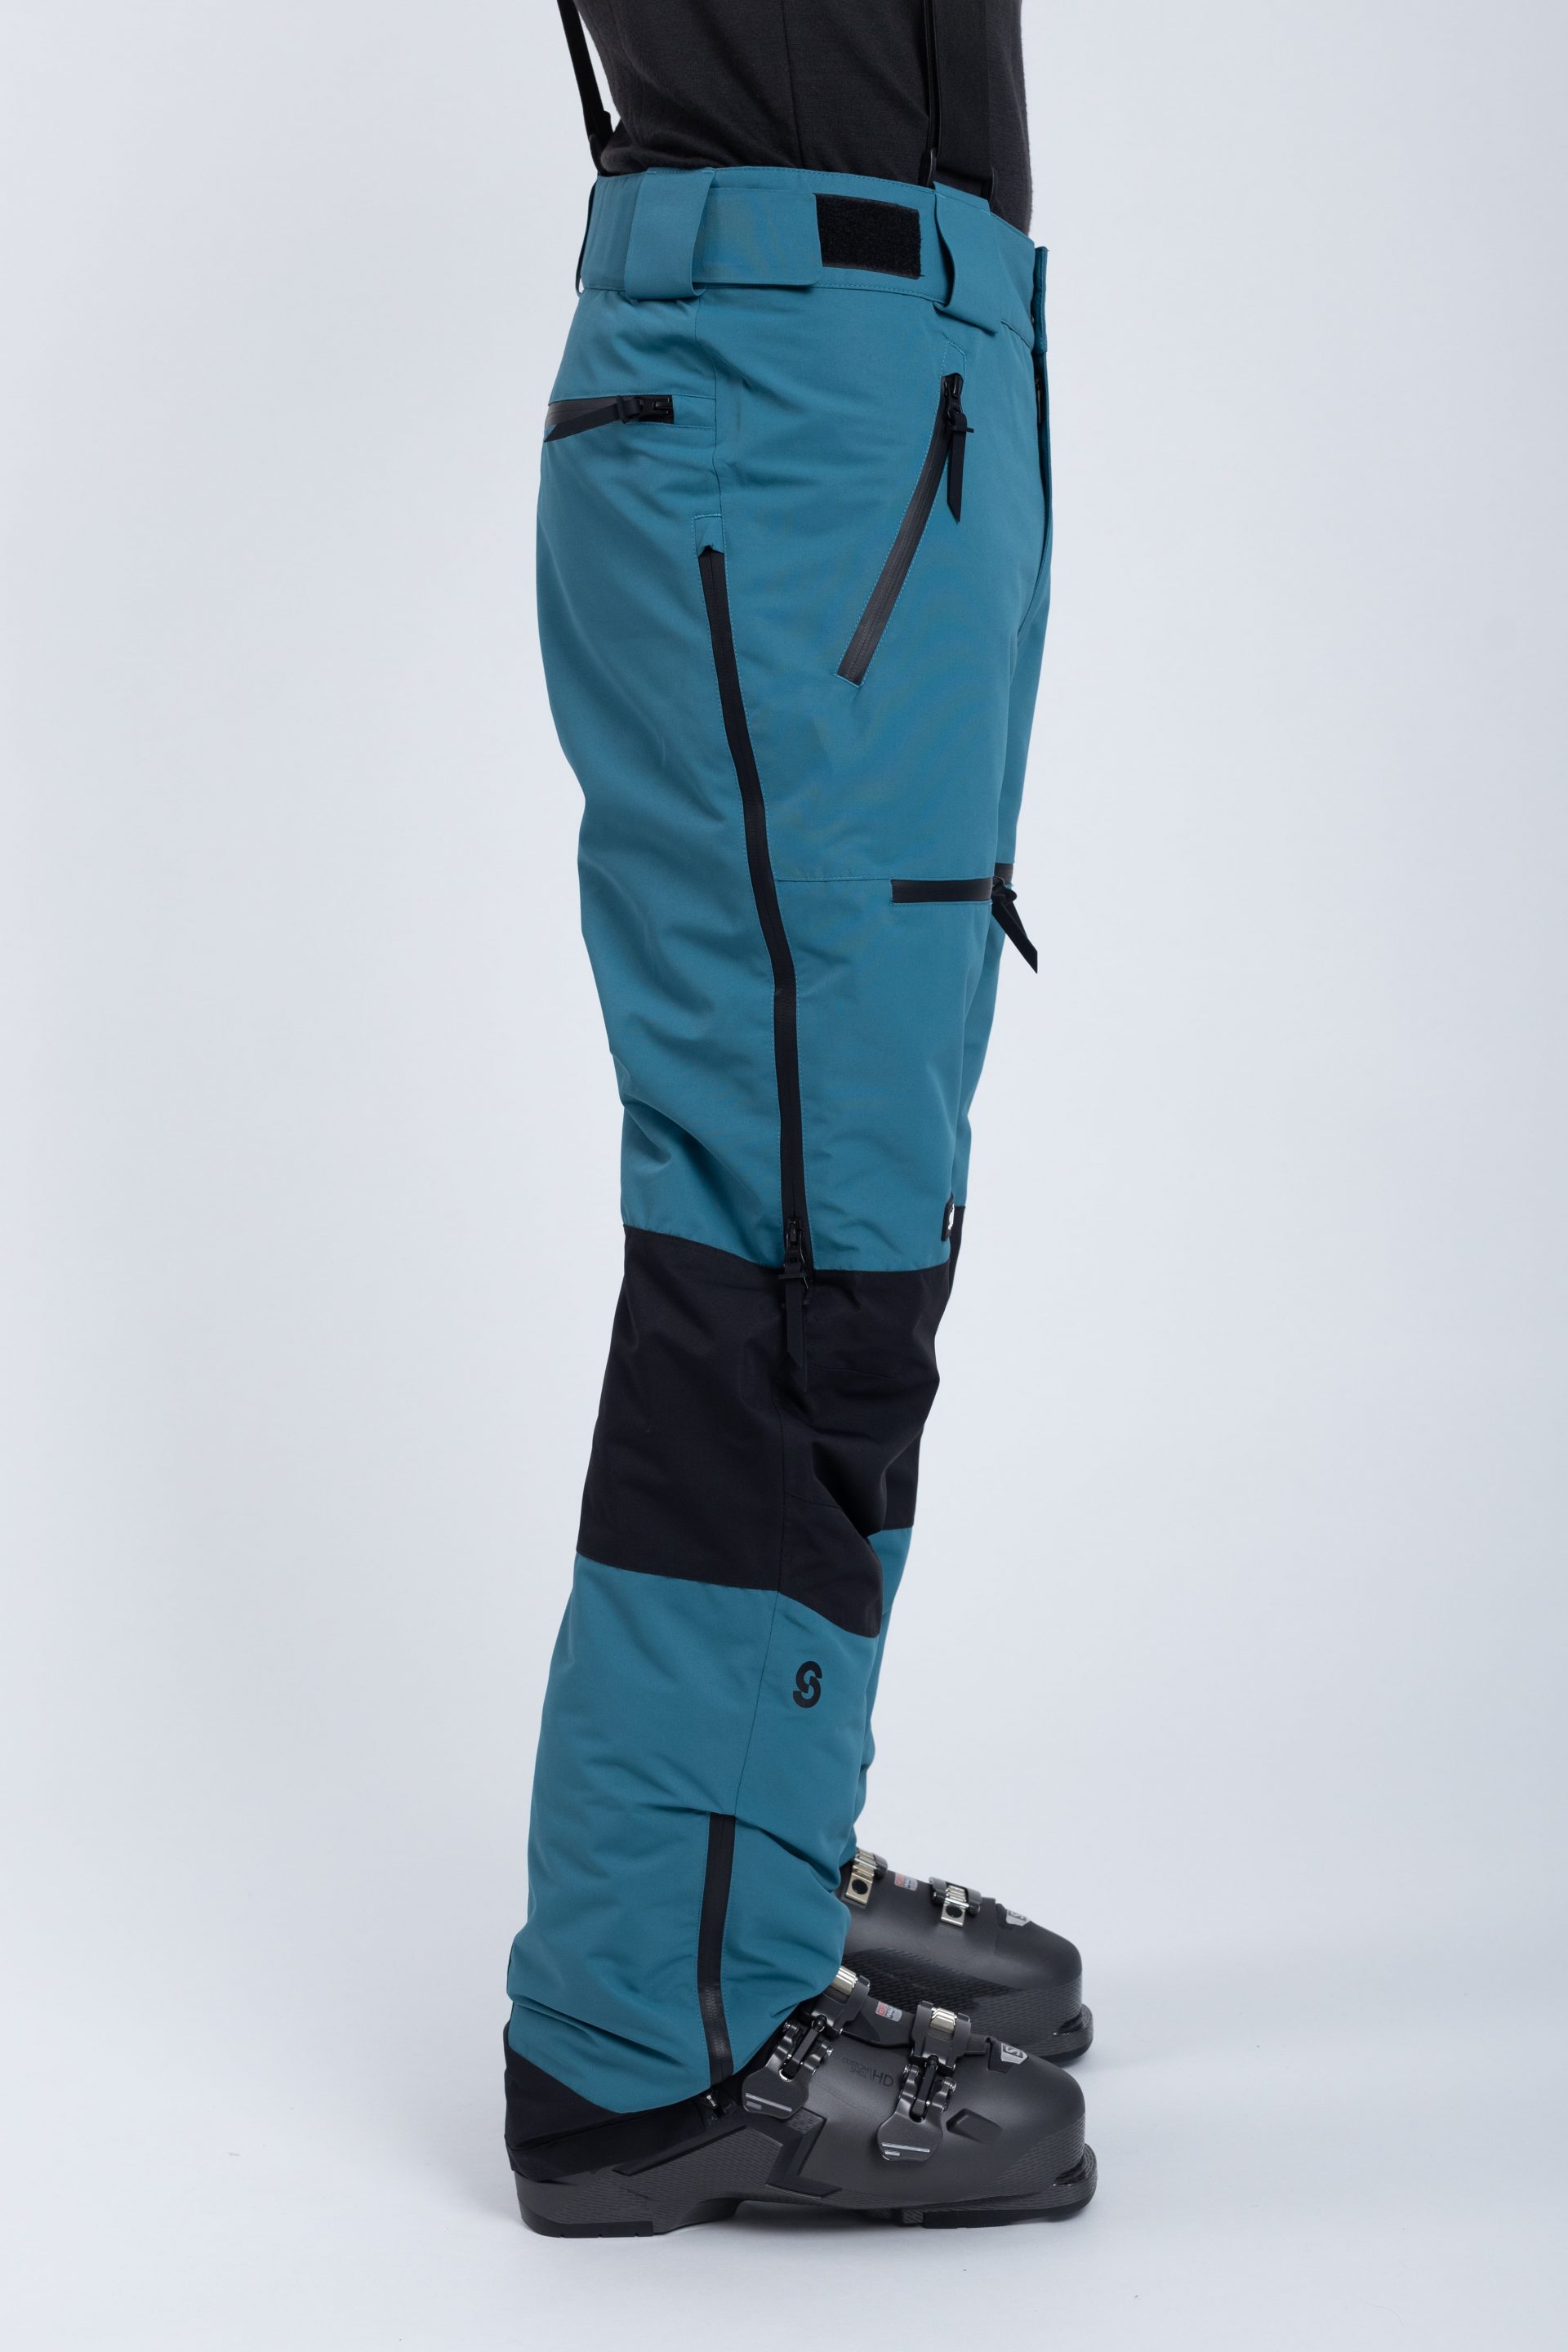 Lynx Ski Pants Black - Men's